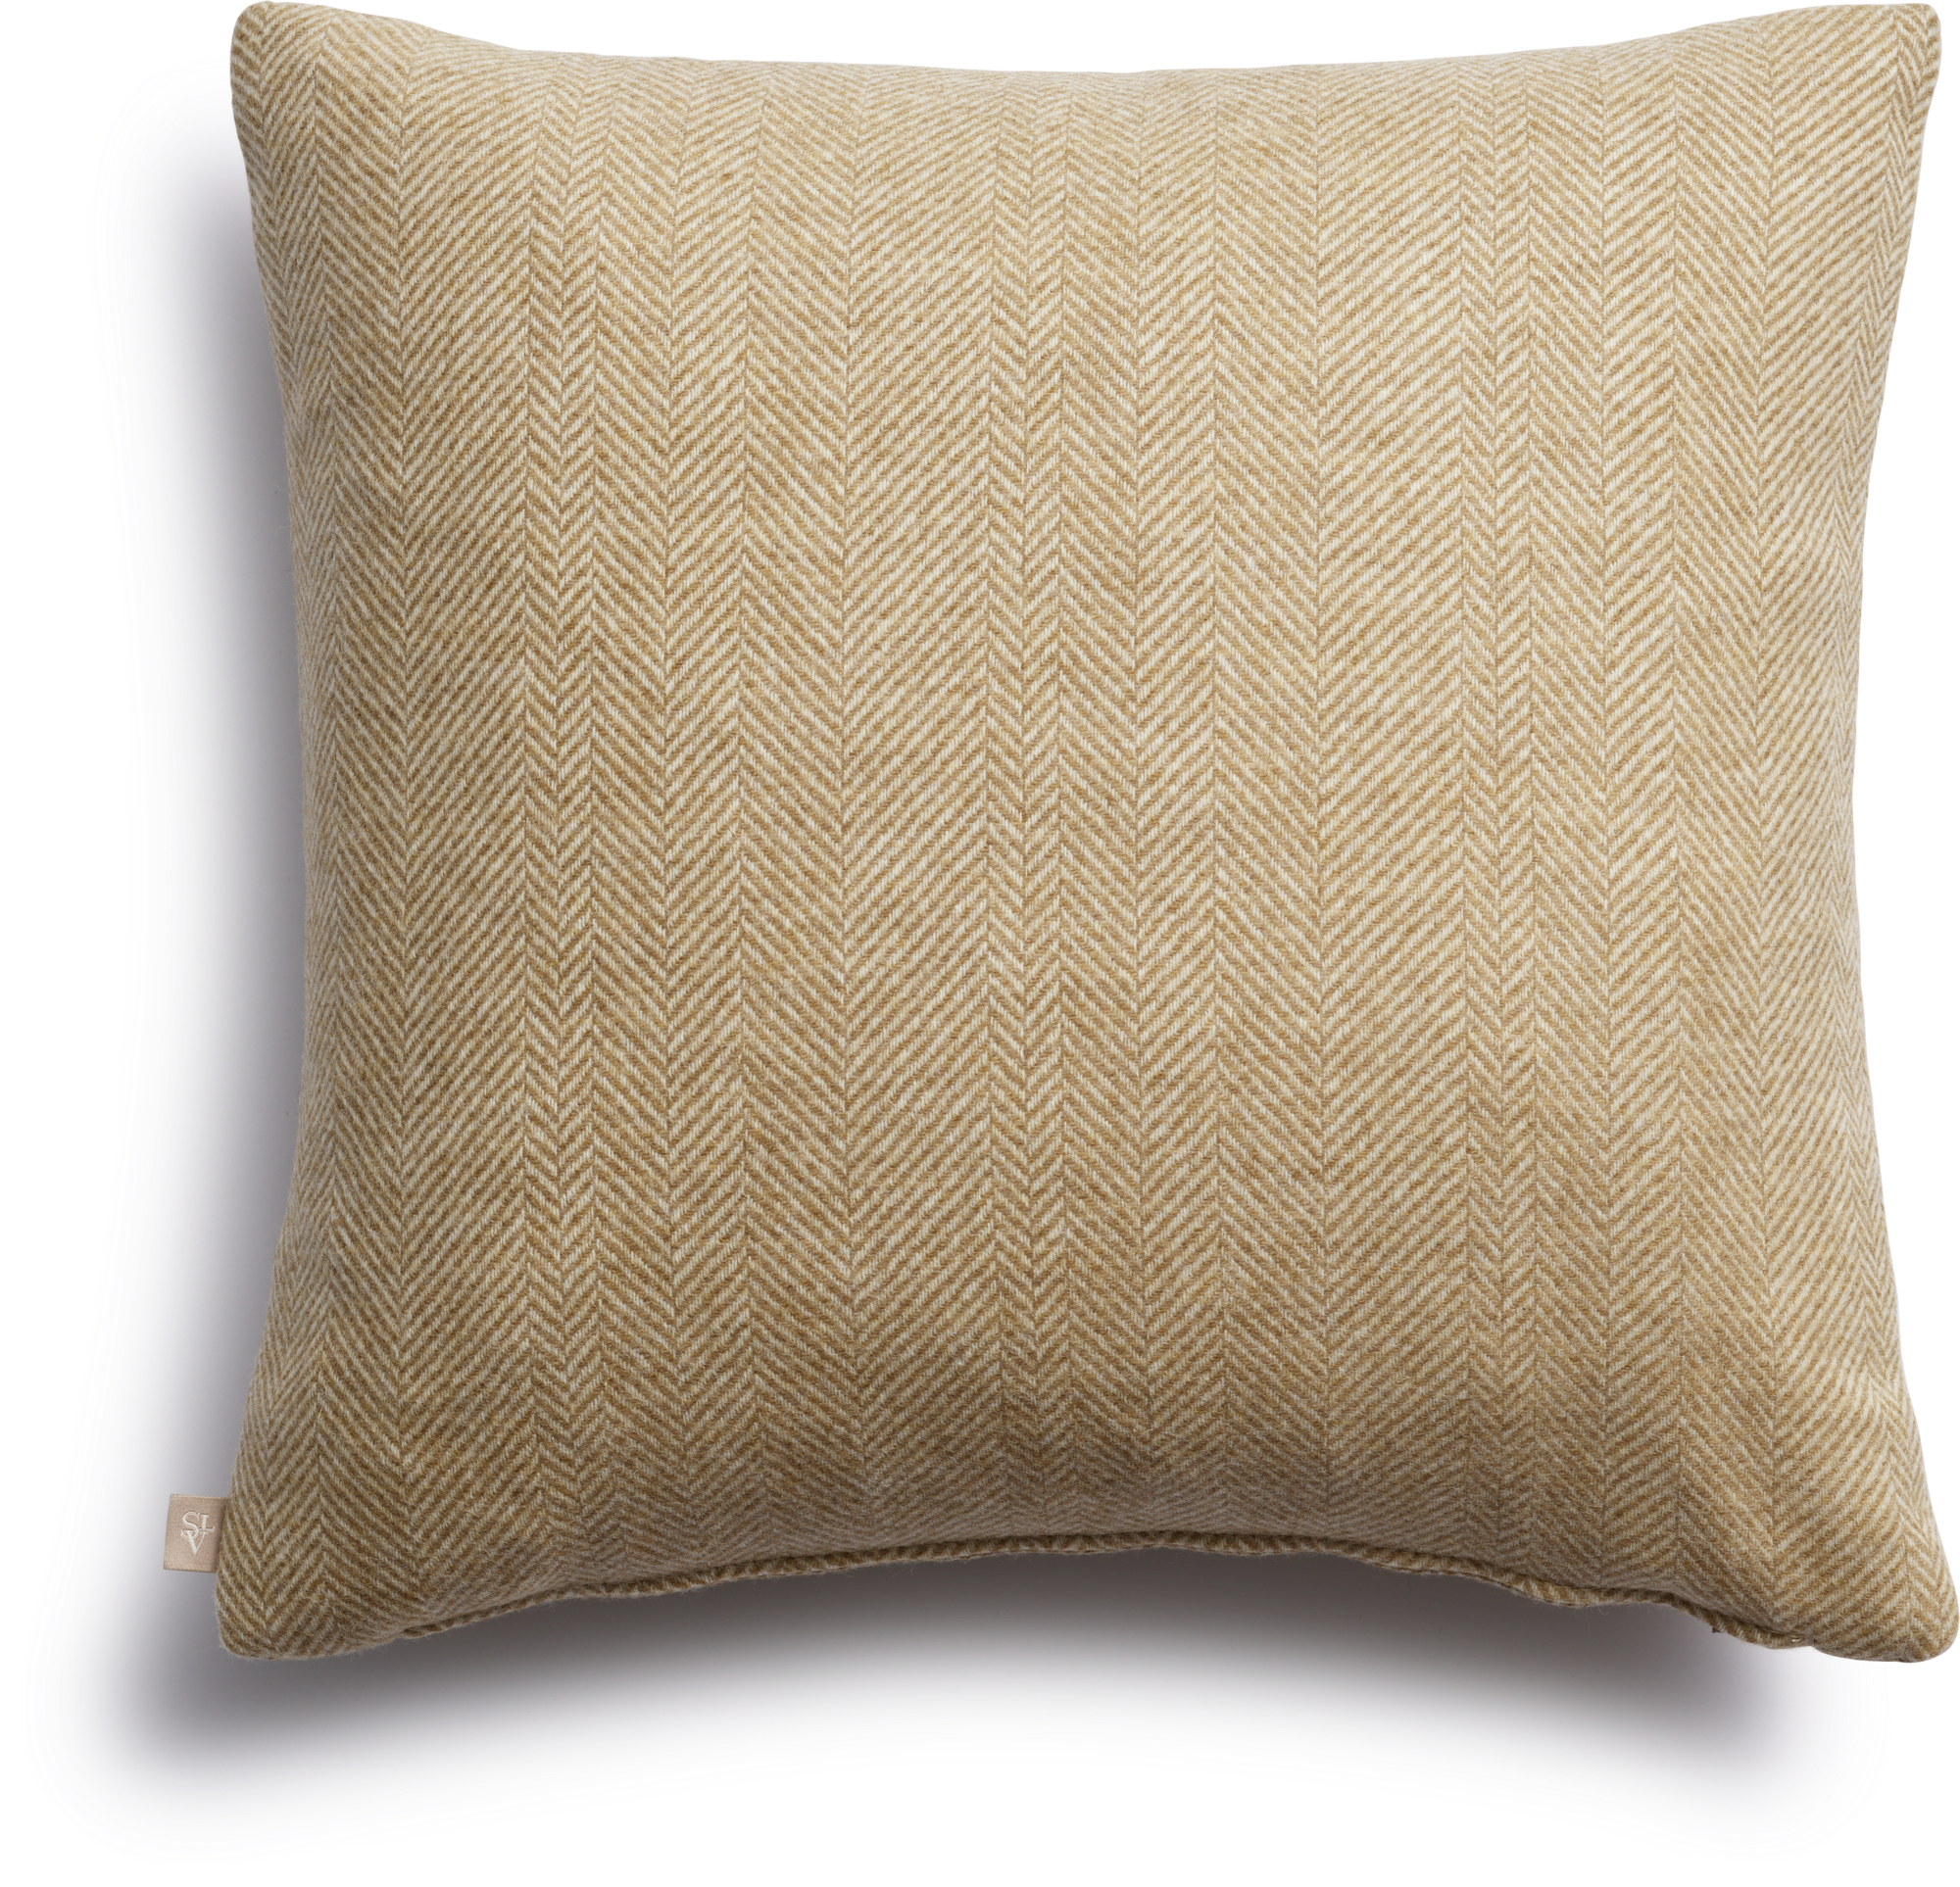 Glen Clova decorative pillow